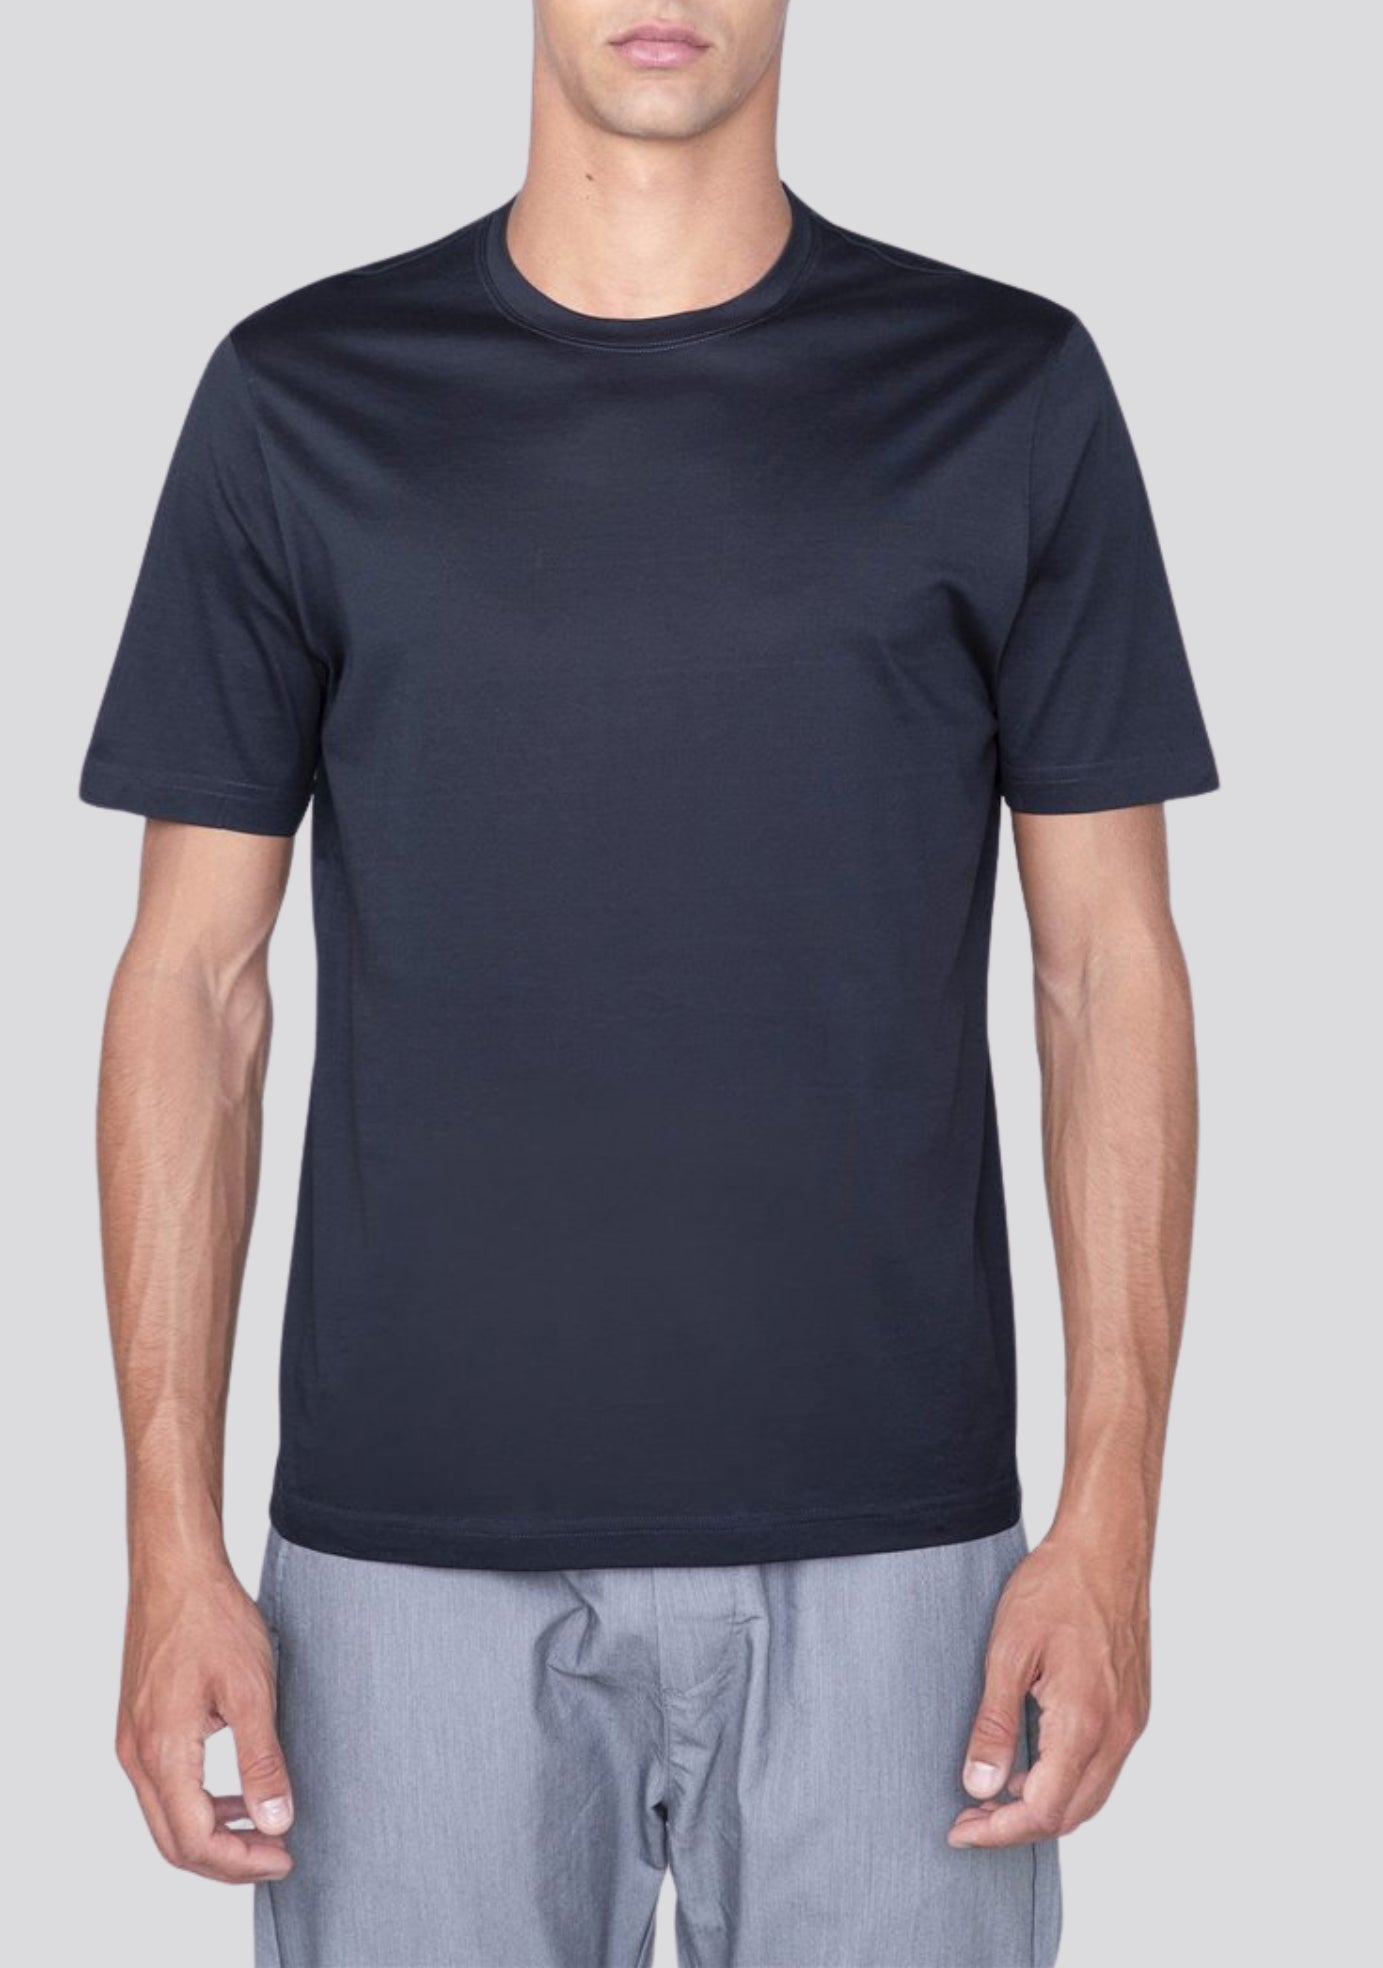 Anthracite Black Cotton T-shirt